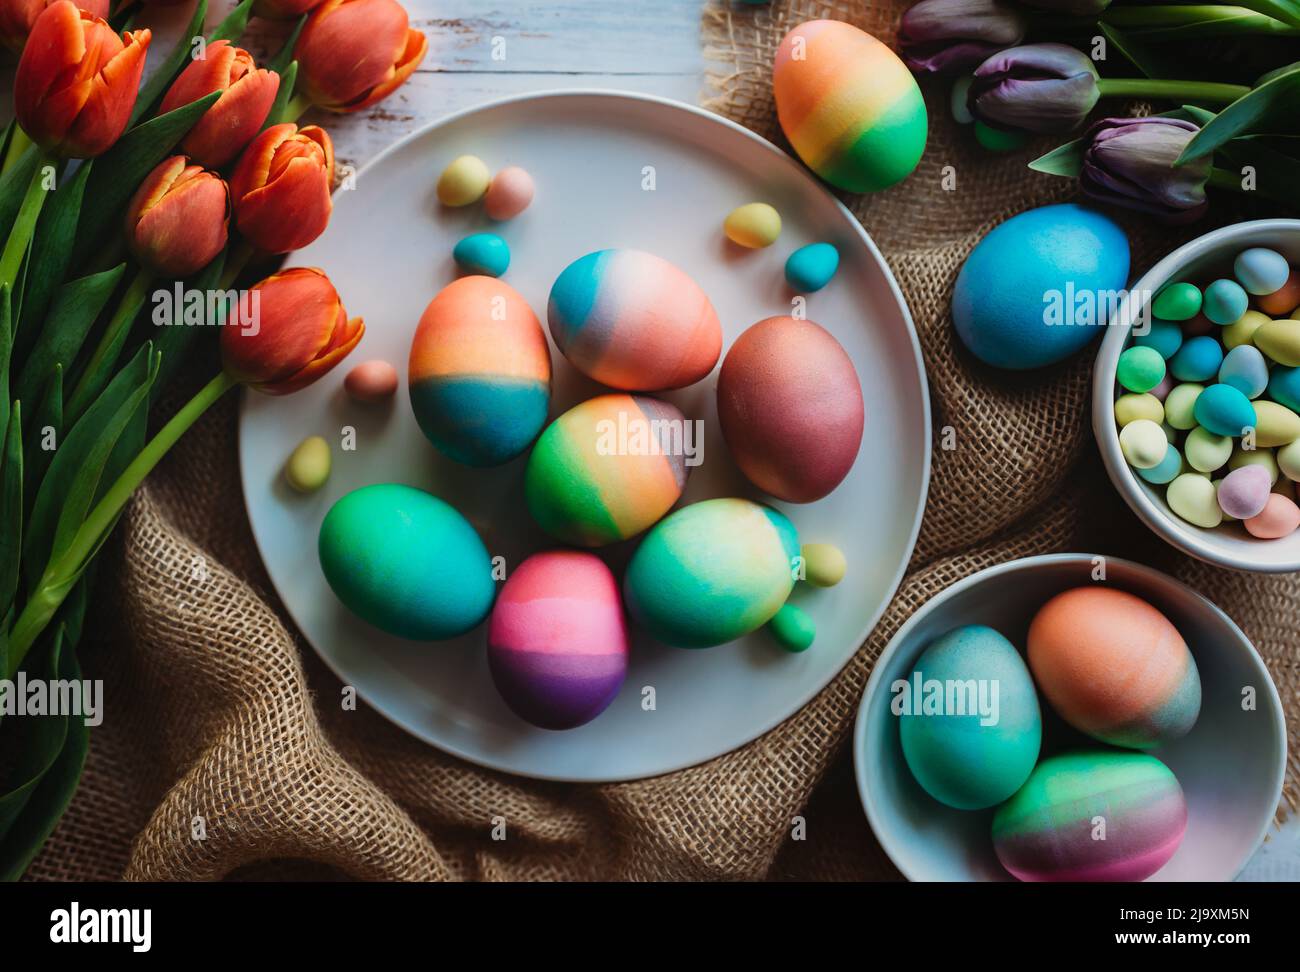 Surtido de huevos de Pascua de colores brillantes rodeados de tulipanes. Foto de stock